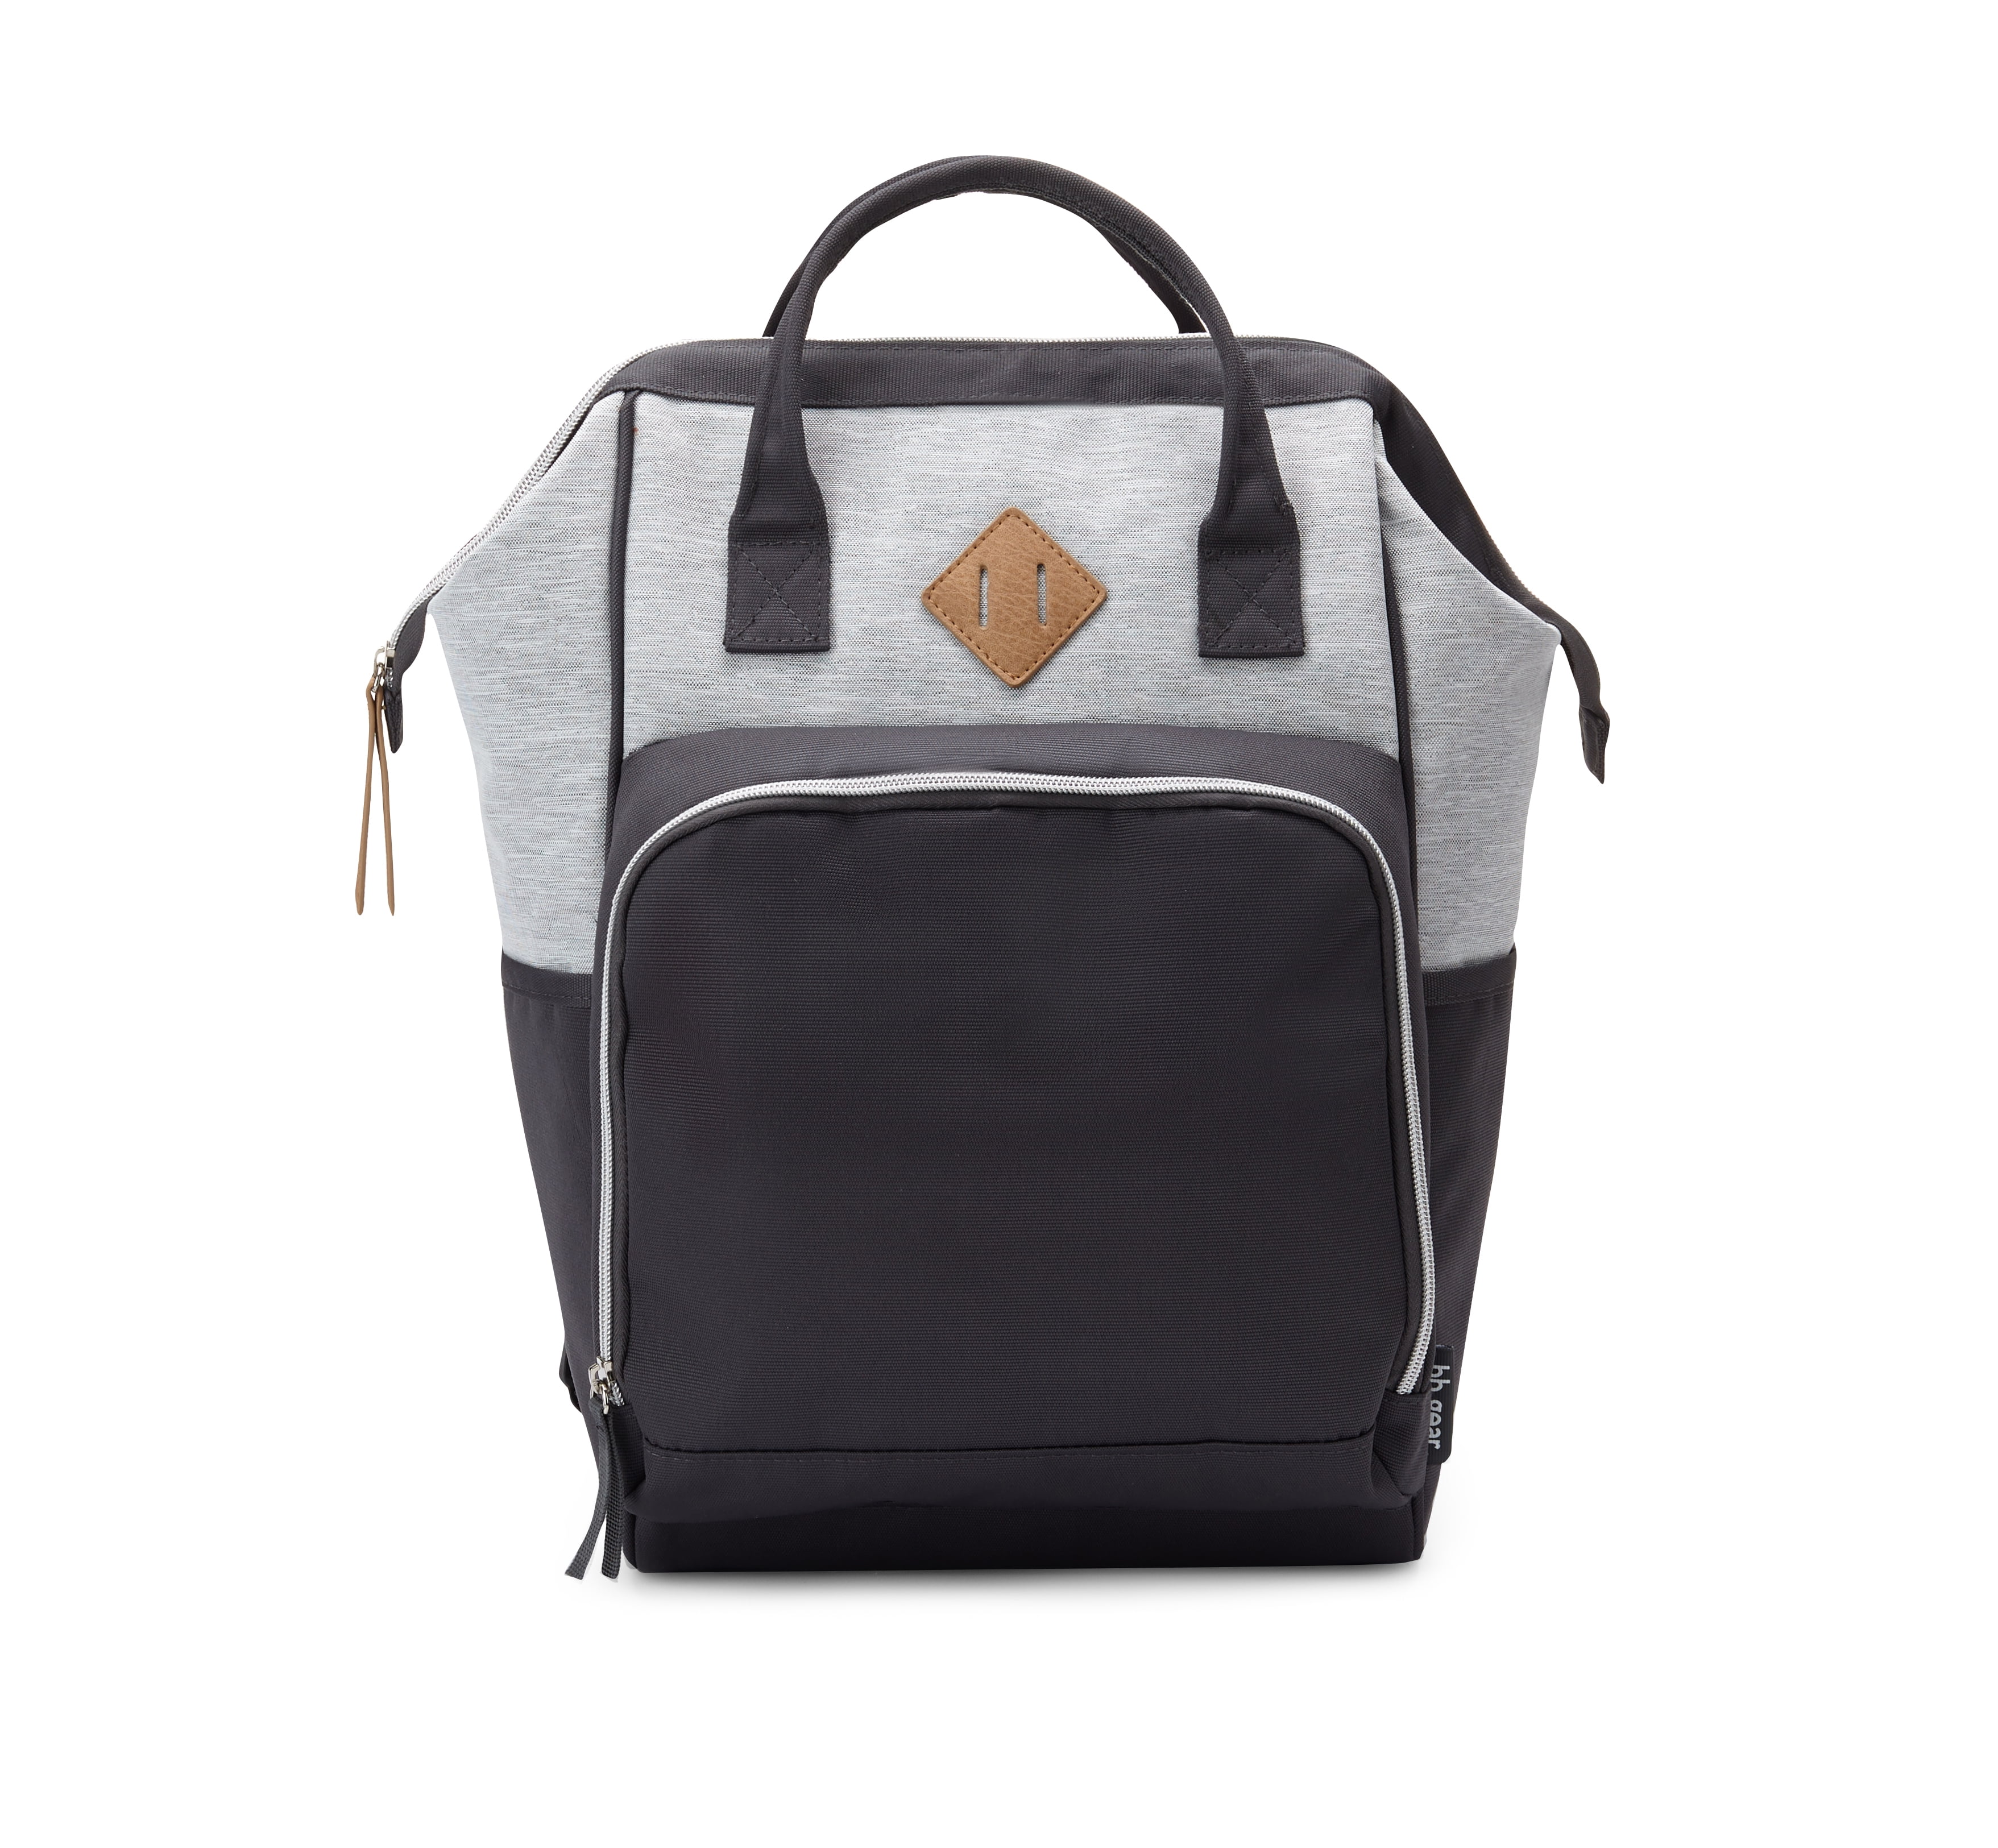 BB Gear Backpack Diaper Bag with Adjustable Shoulder Strap, Gray -  Walmart.com